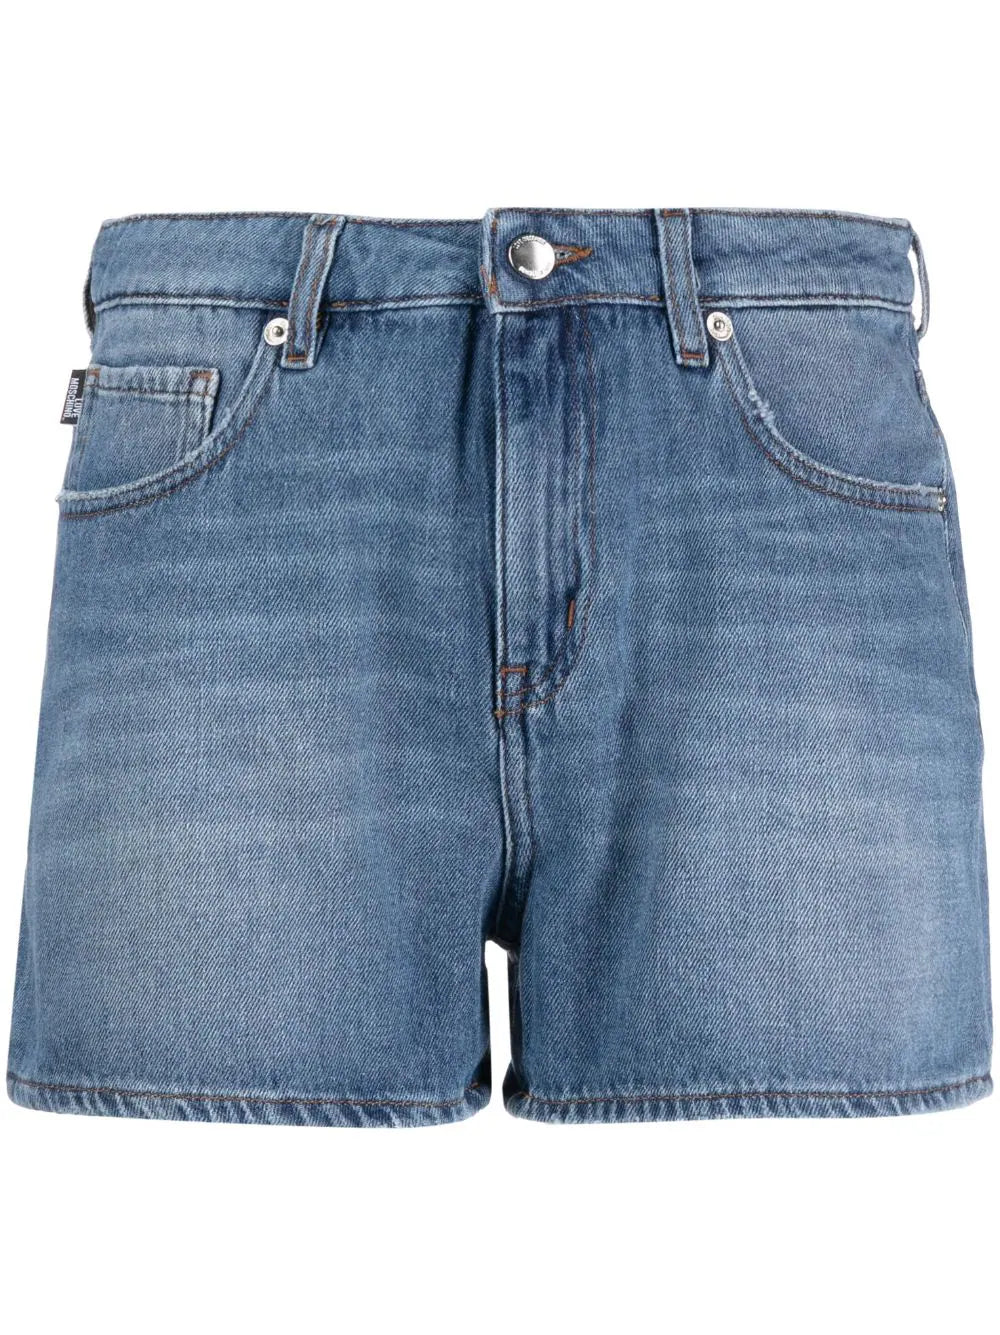 Shorts in Denim Love Moschino / Jeans - Ideal Moda